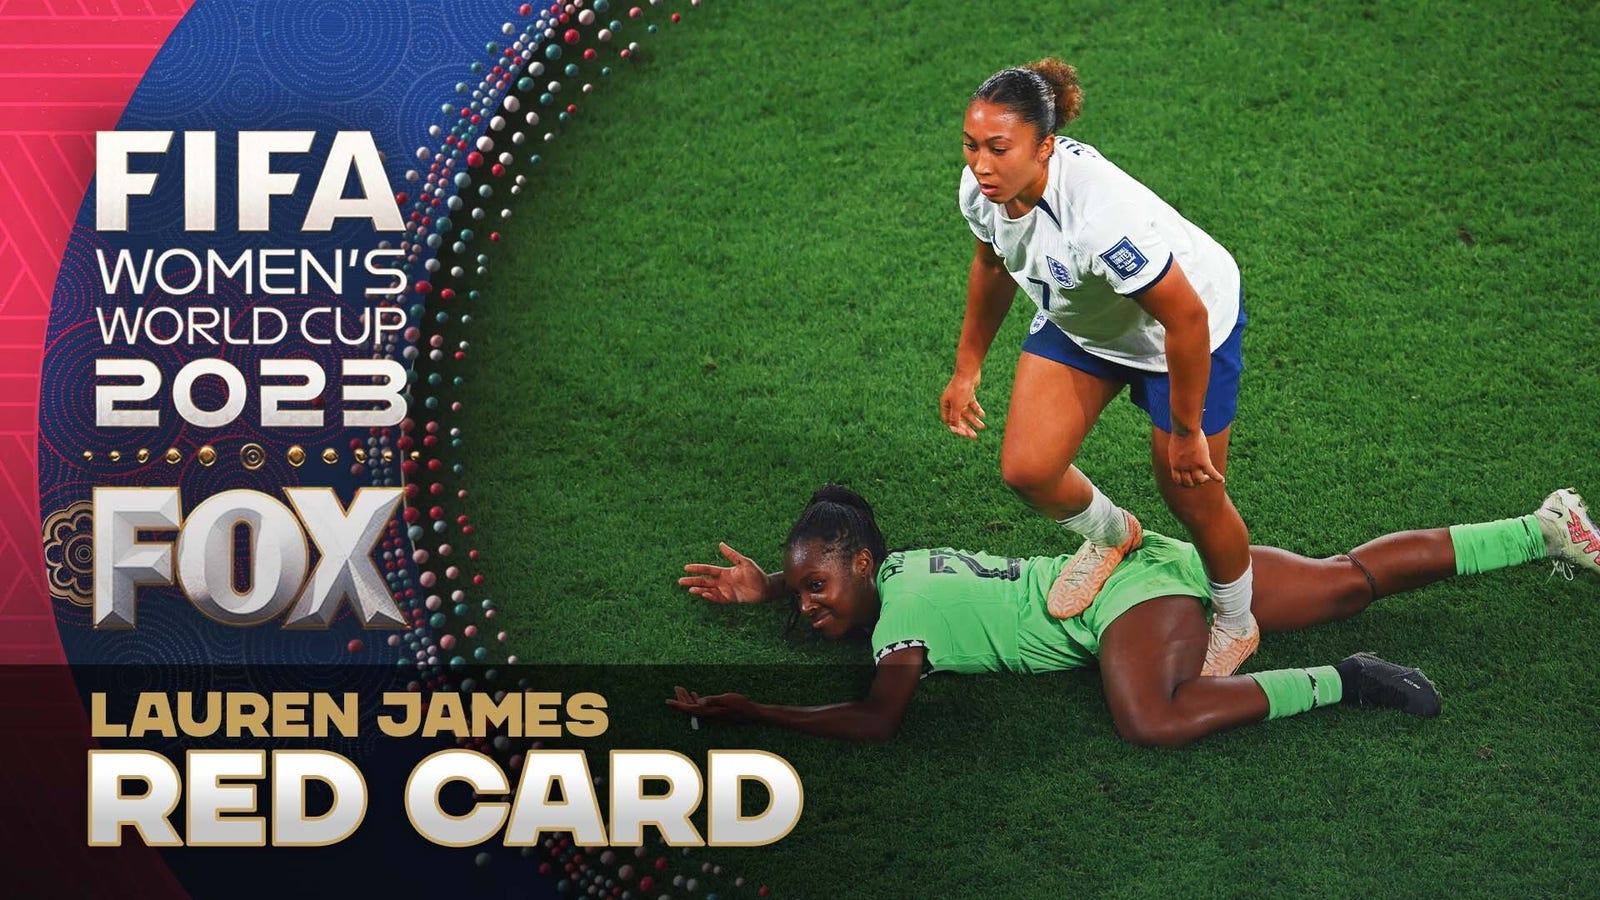 England's Lauren James receives a RED CARD